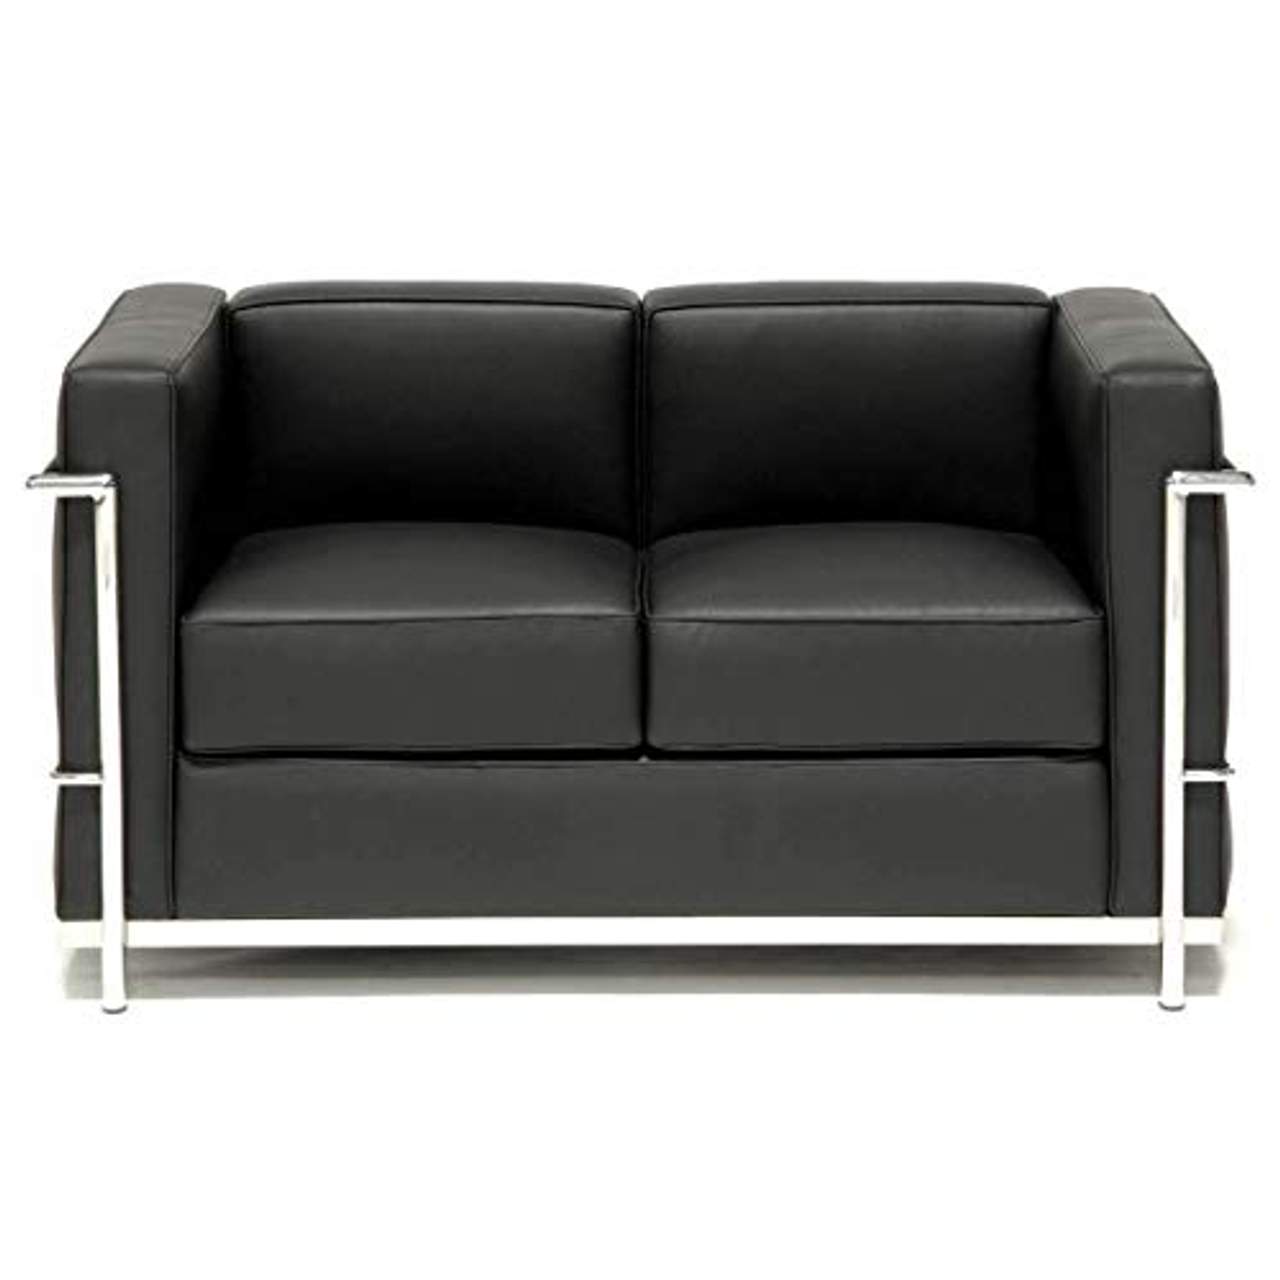 National Office Furniture Supplies Le Corbusier Inspiriert Kunstleder Schwarz 2-Sitzer Sofa